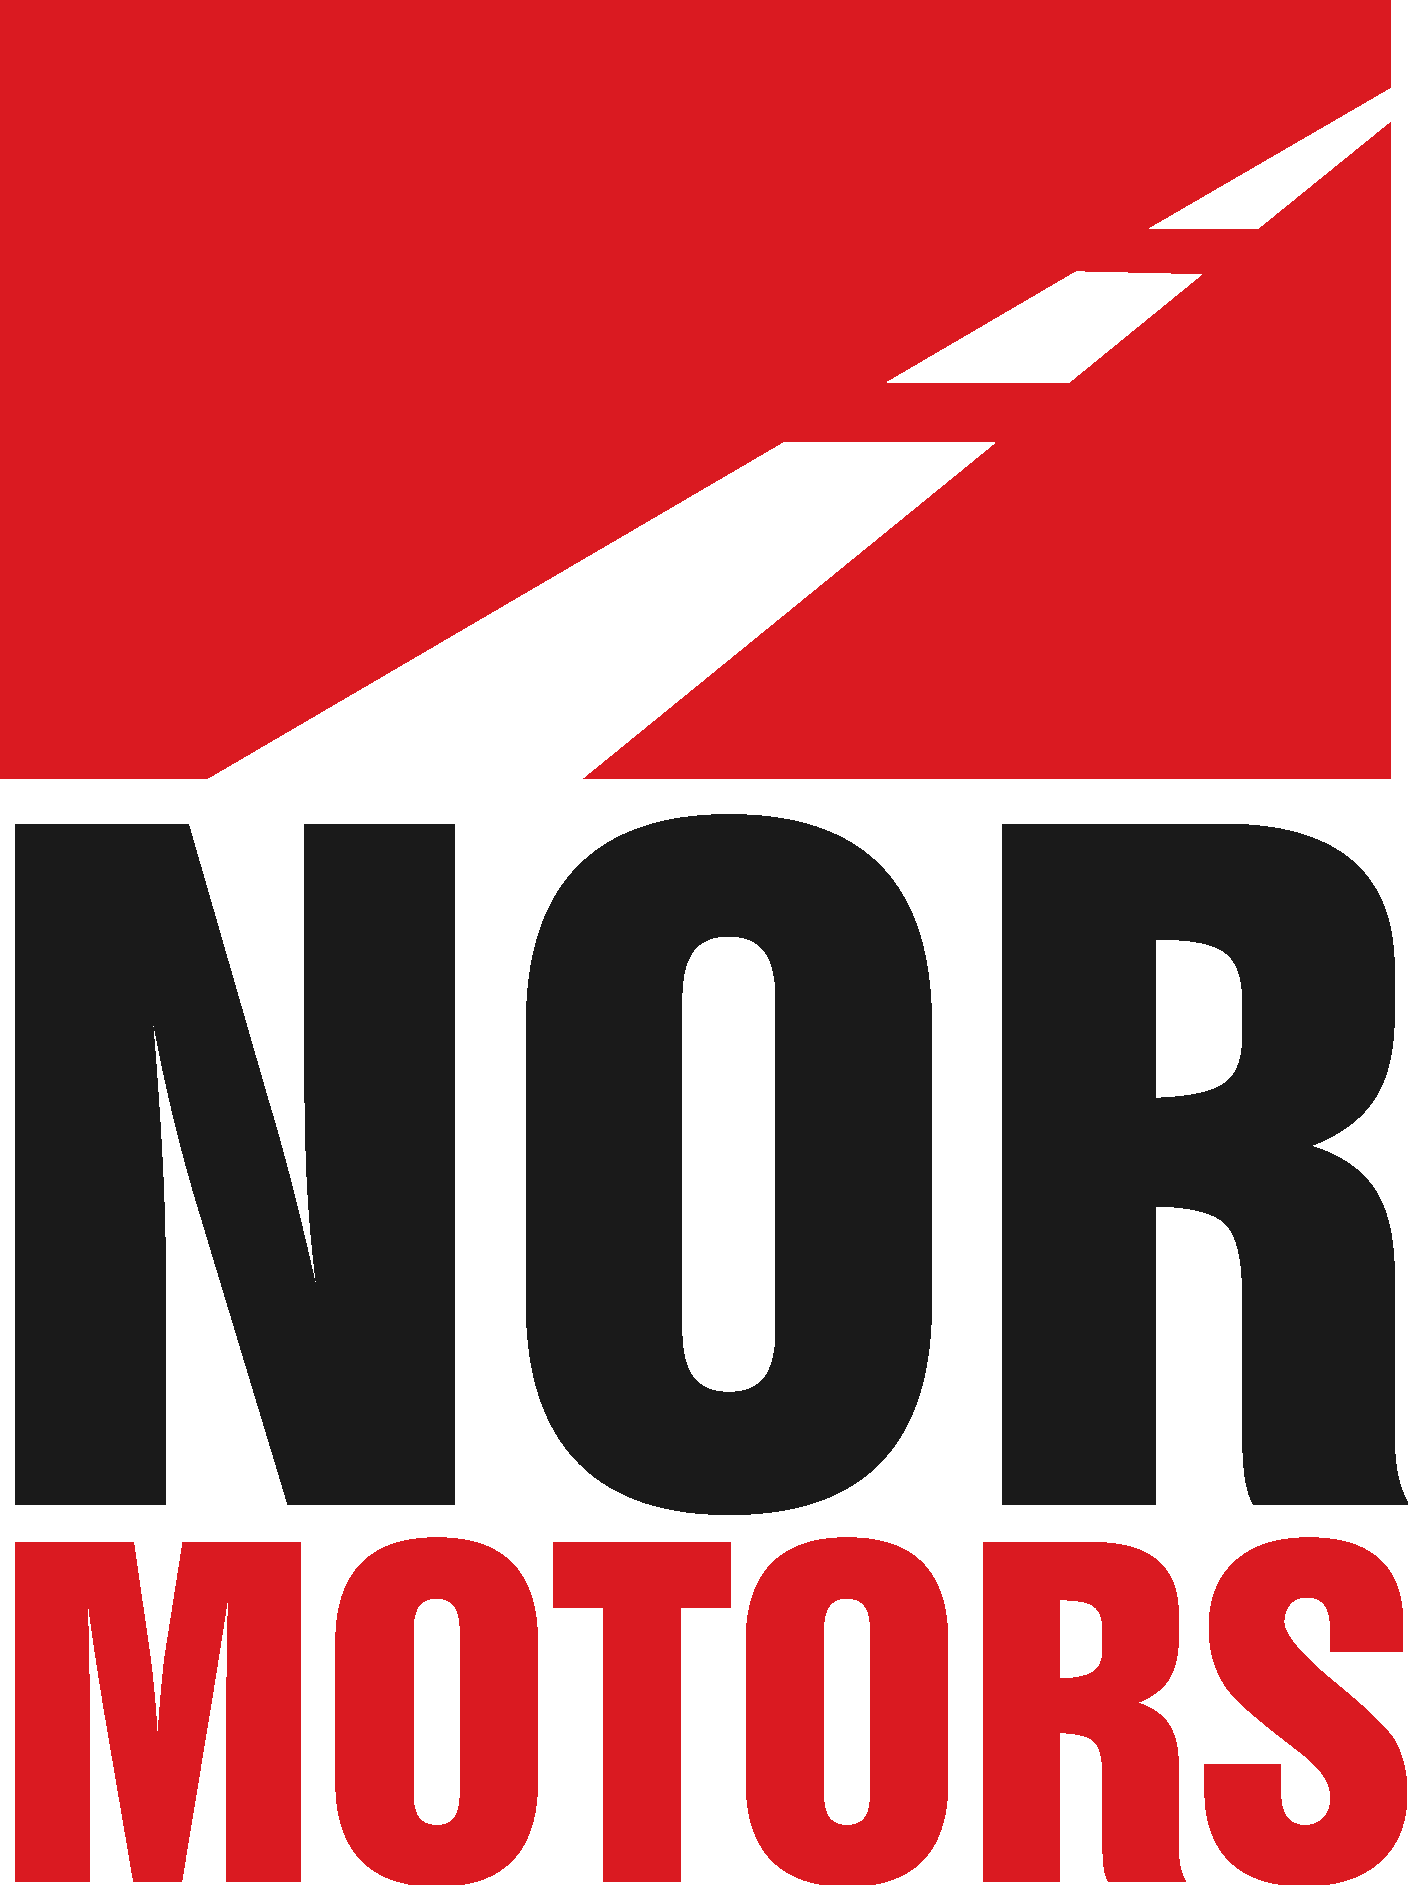 NOR Motors Logo Vector